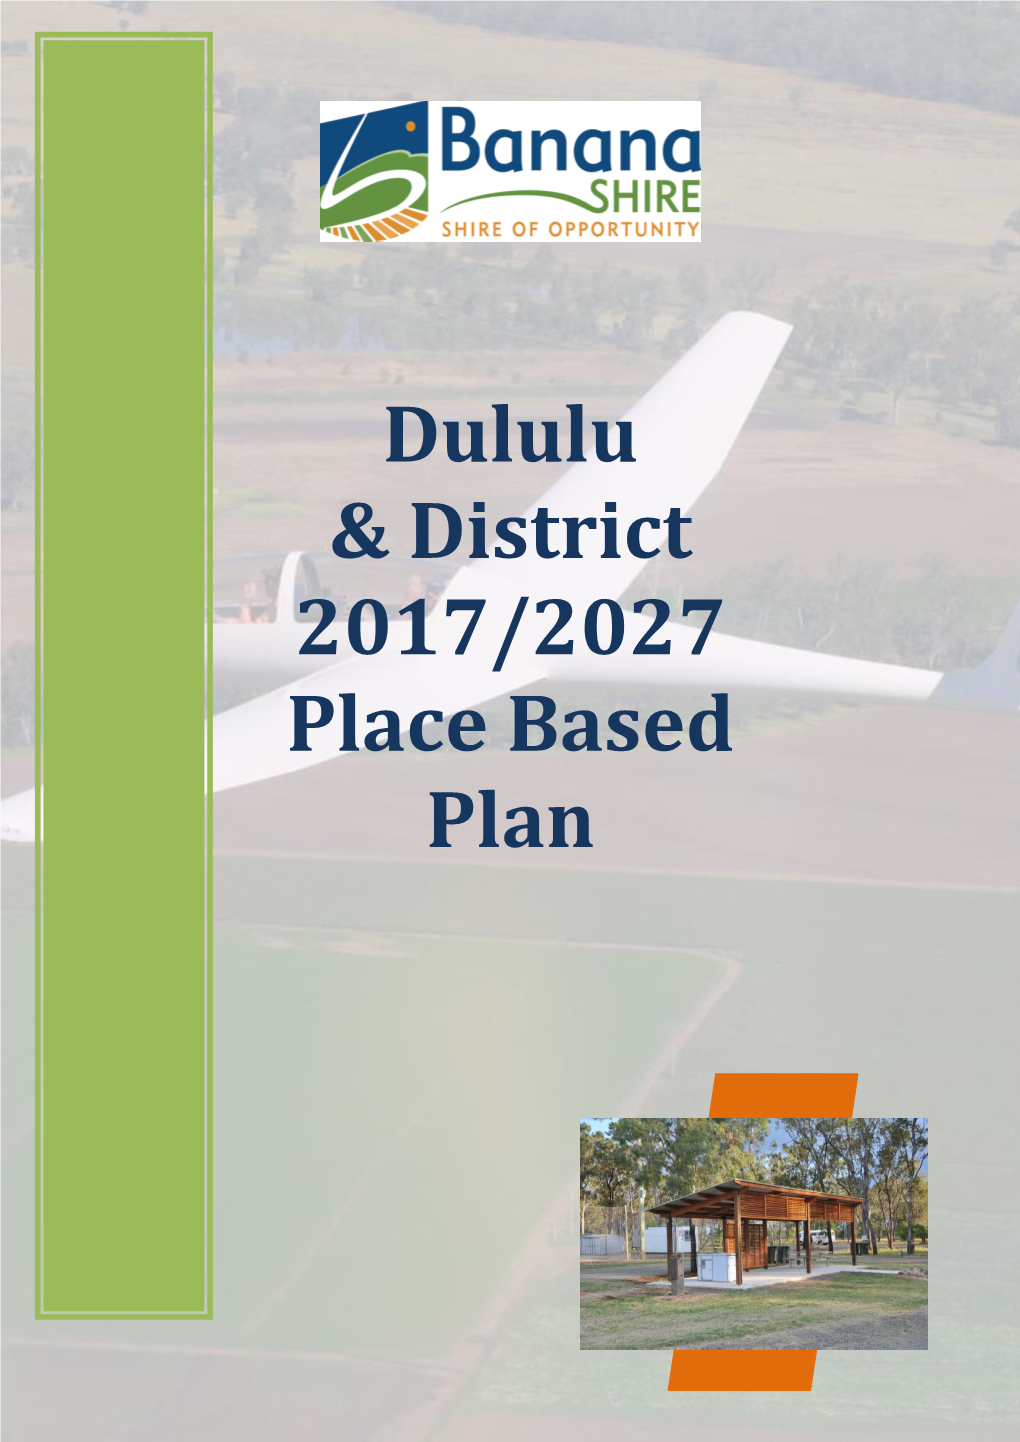 Dululu & District 2017/2027 Place Based Plan